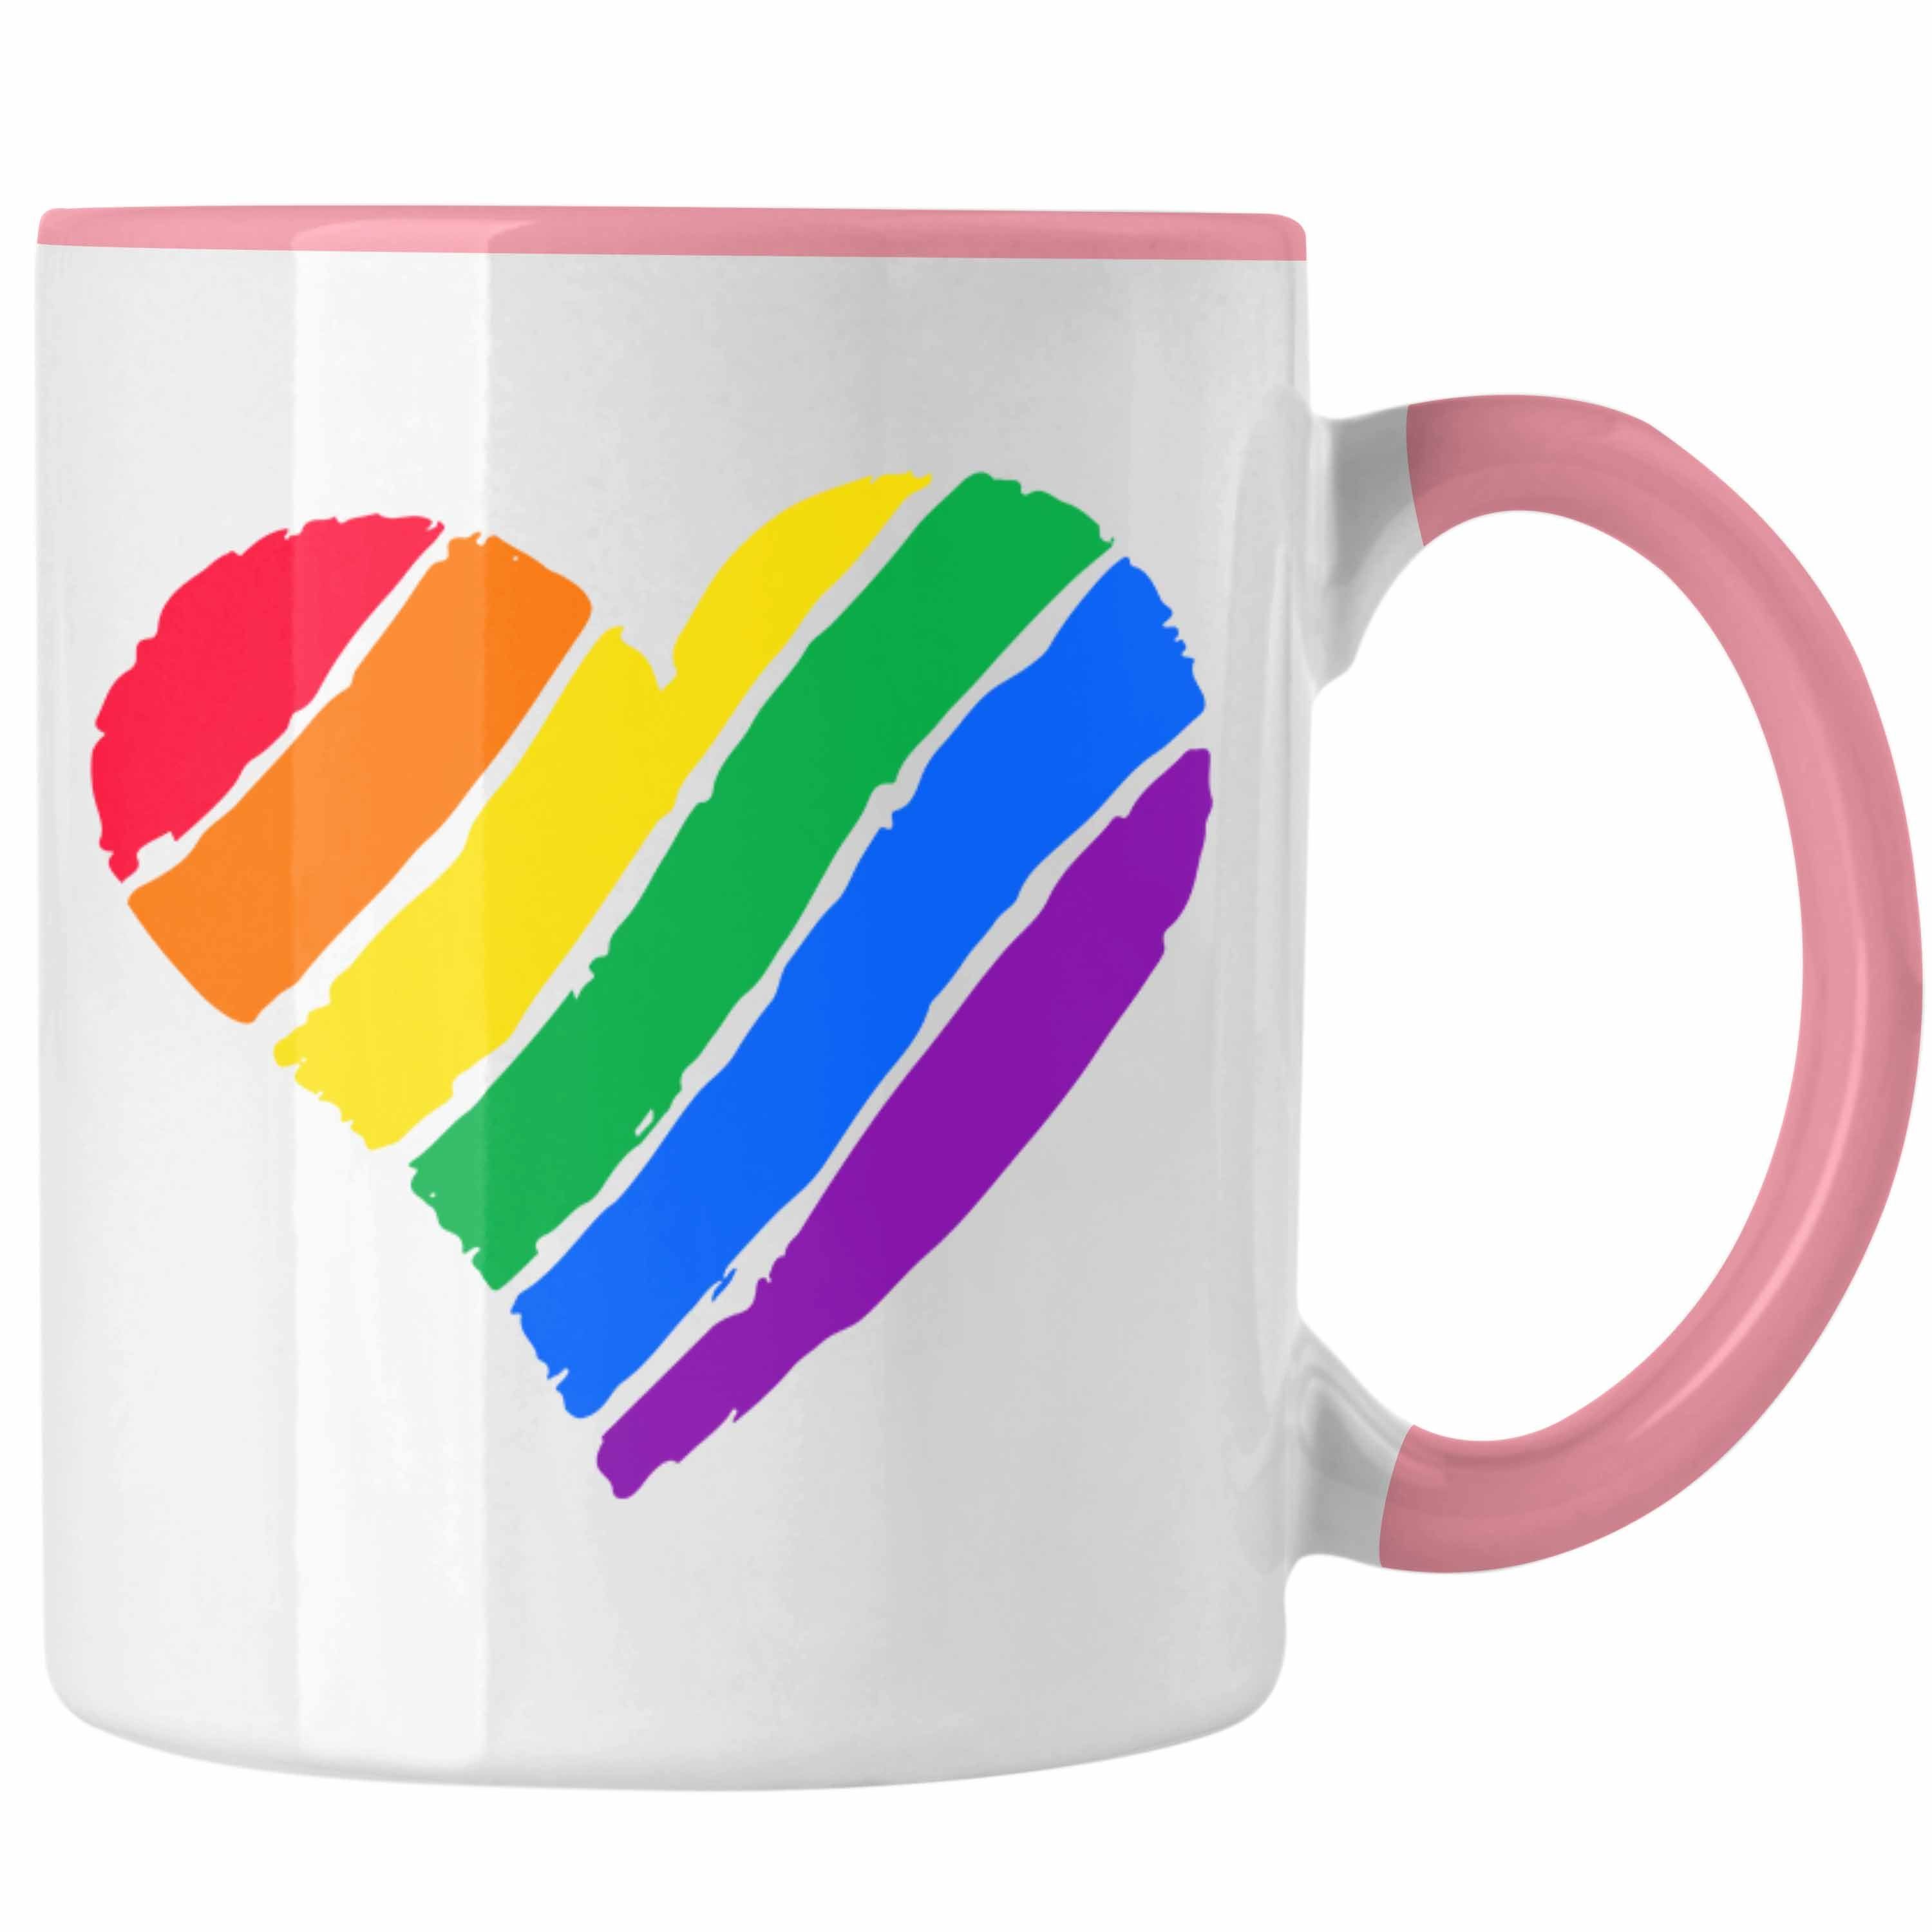 Trendation Tasse Trendation - Regenbogen Tasse Geschenk LGBT Schwule Lesben Transgender Grafik Pride Herz Rosa